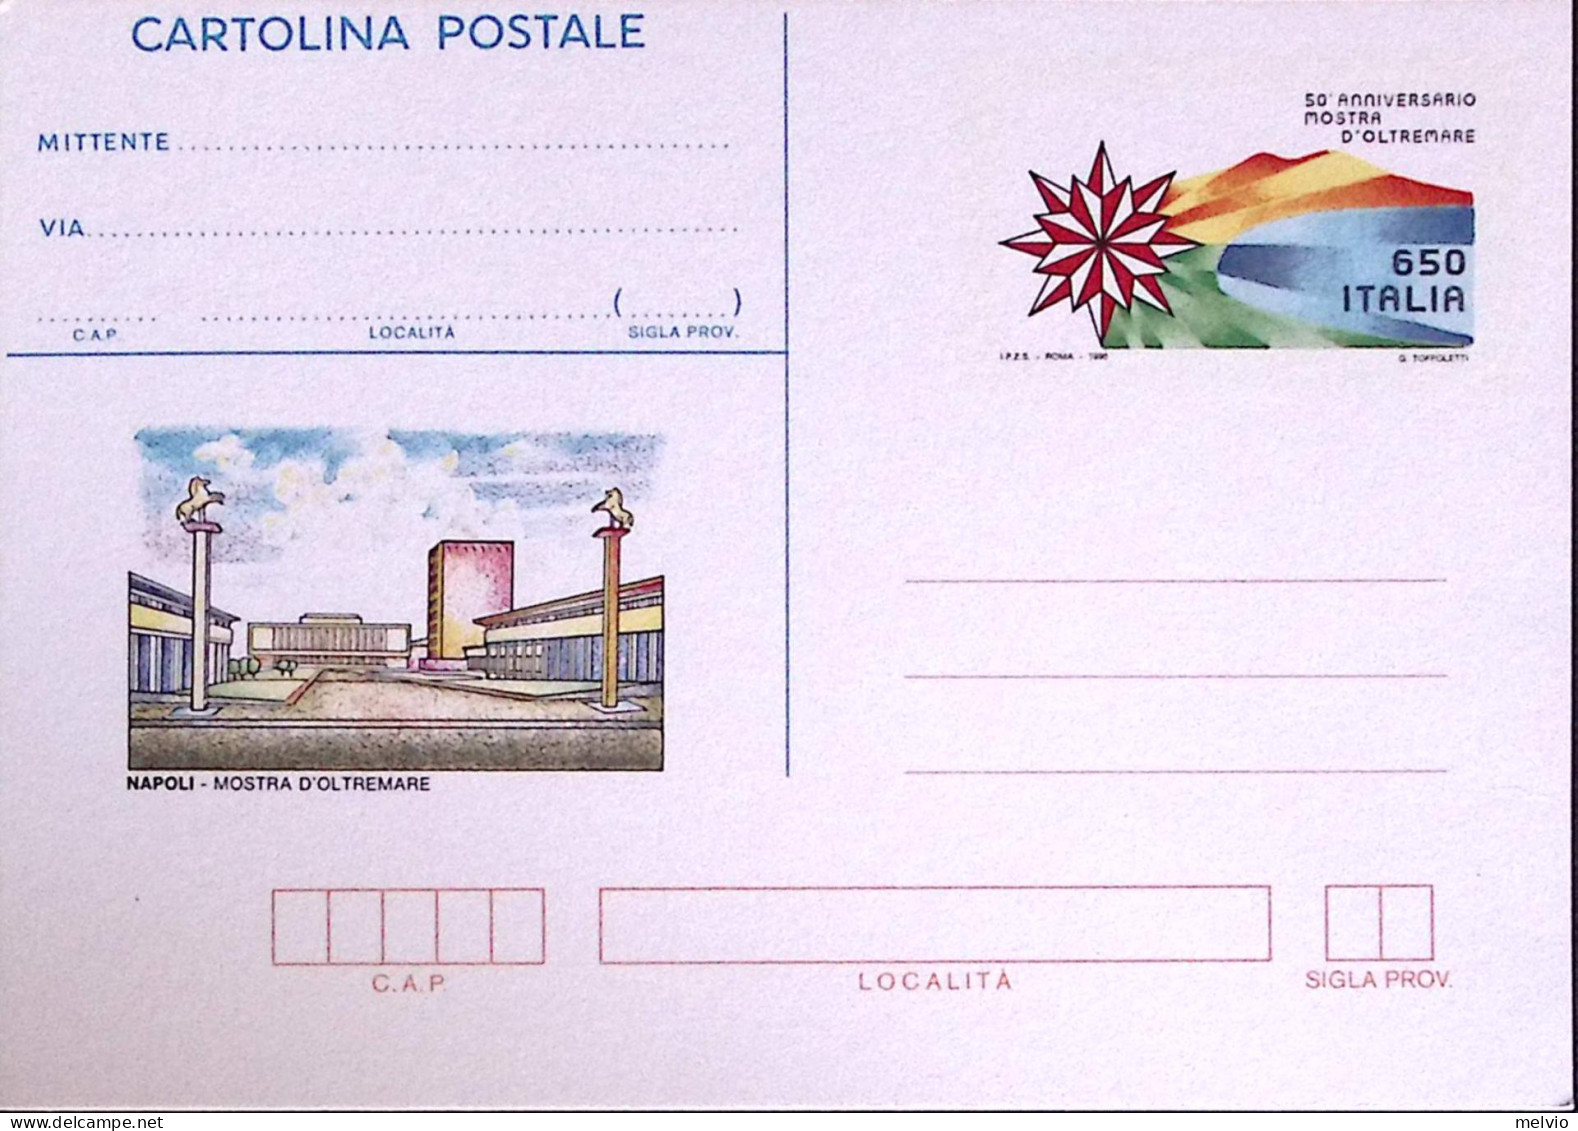 1990-Cartolina Postale Lire 650 Mostra D'oltremare Nuova - Interi Postali